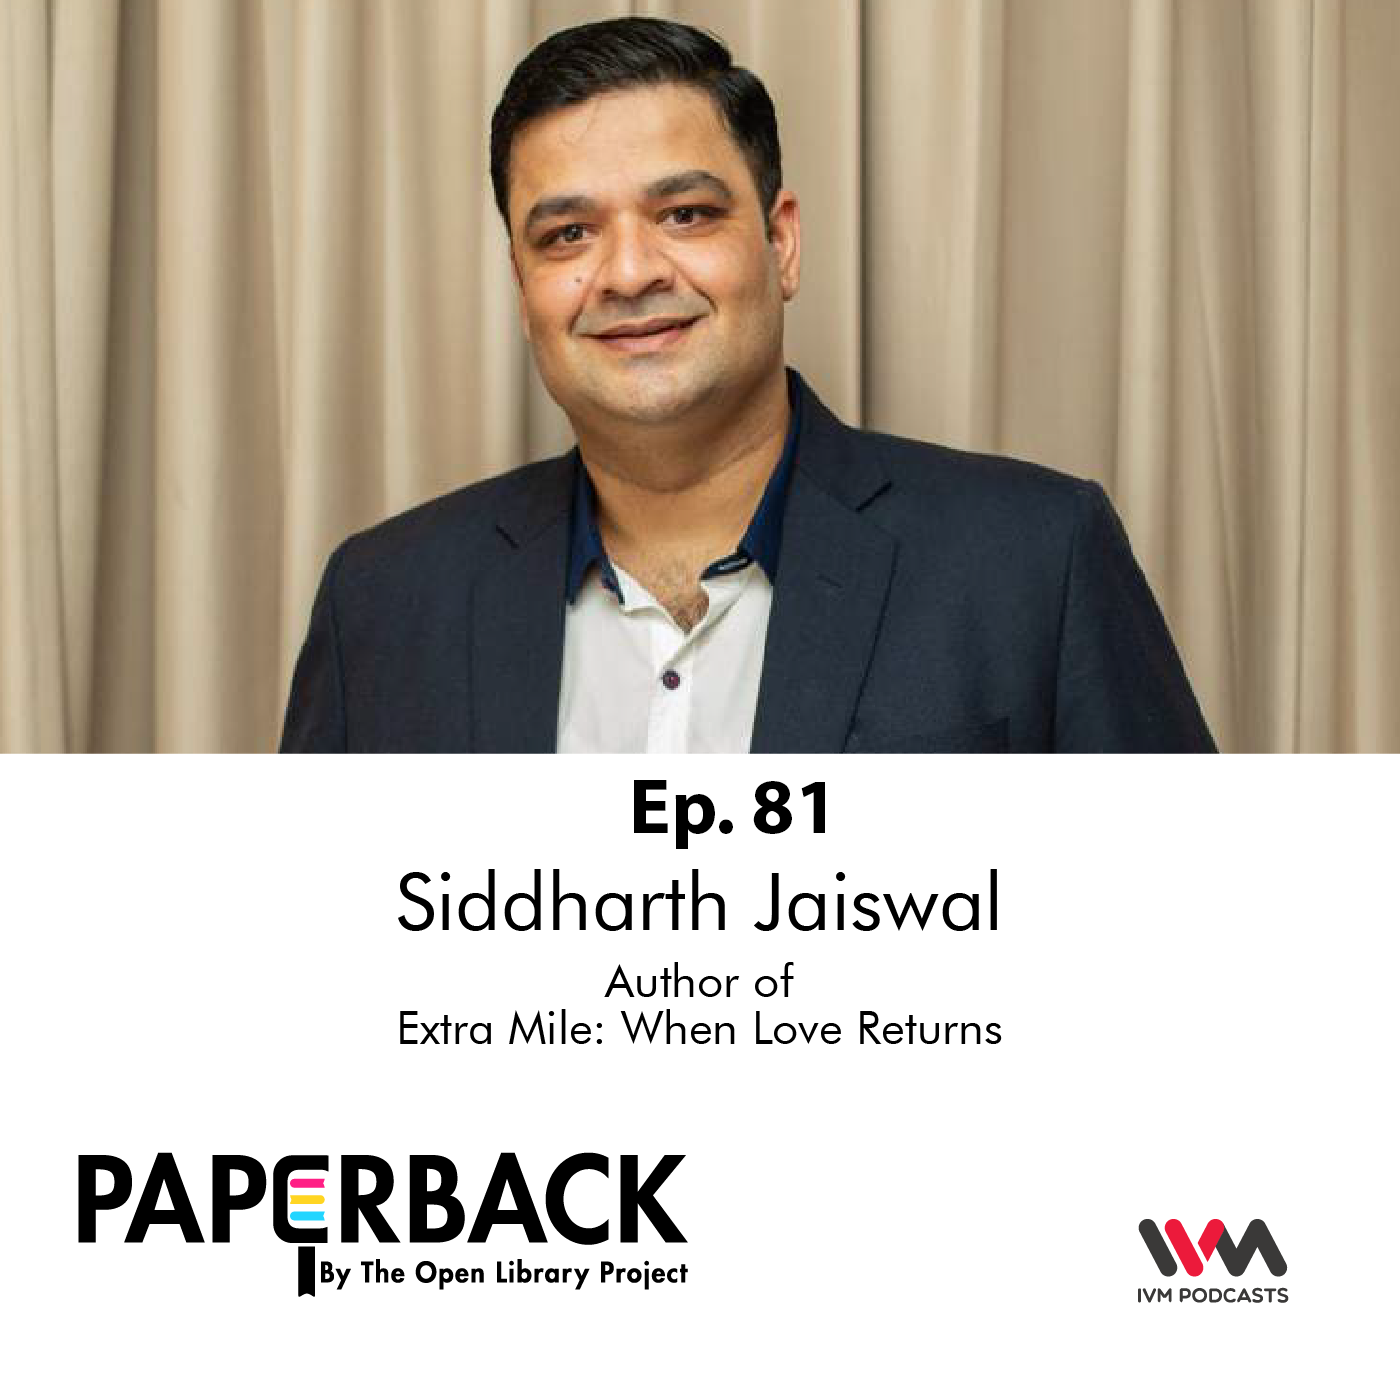 Ep. 81: Siddharth Jaiswal